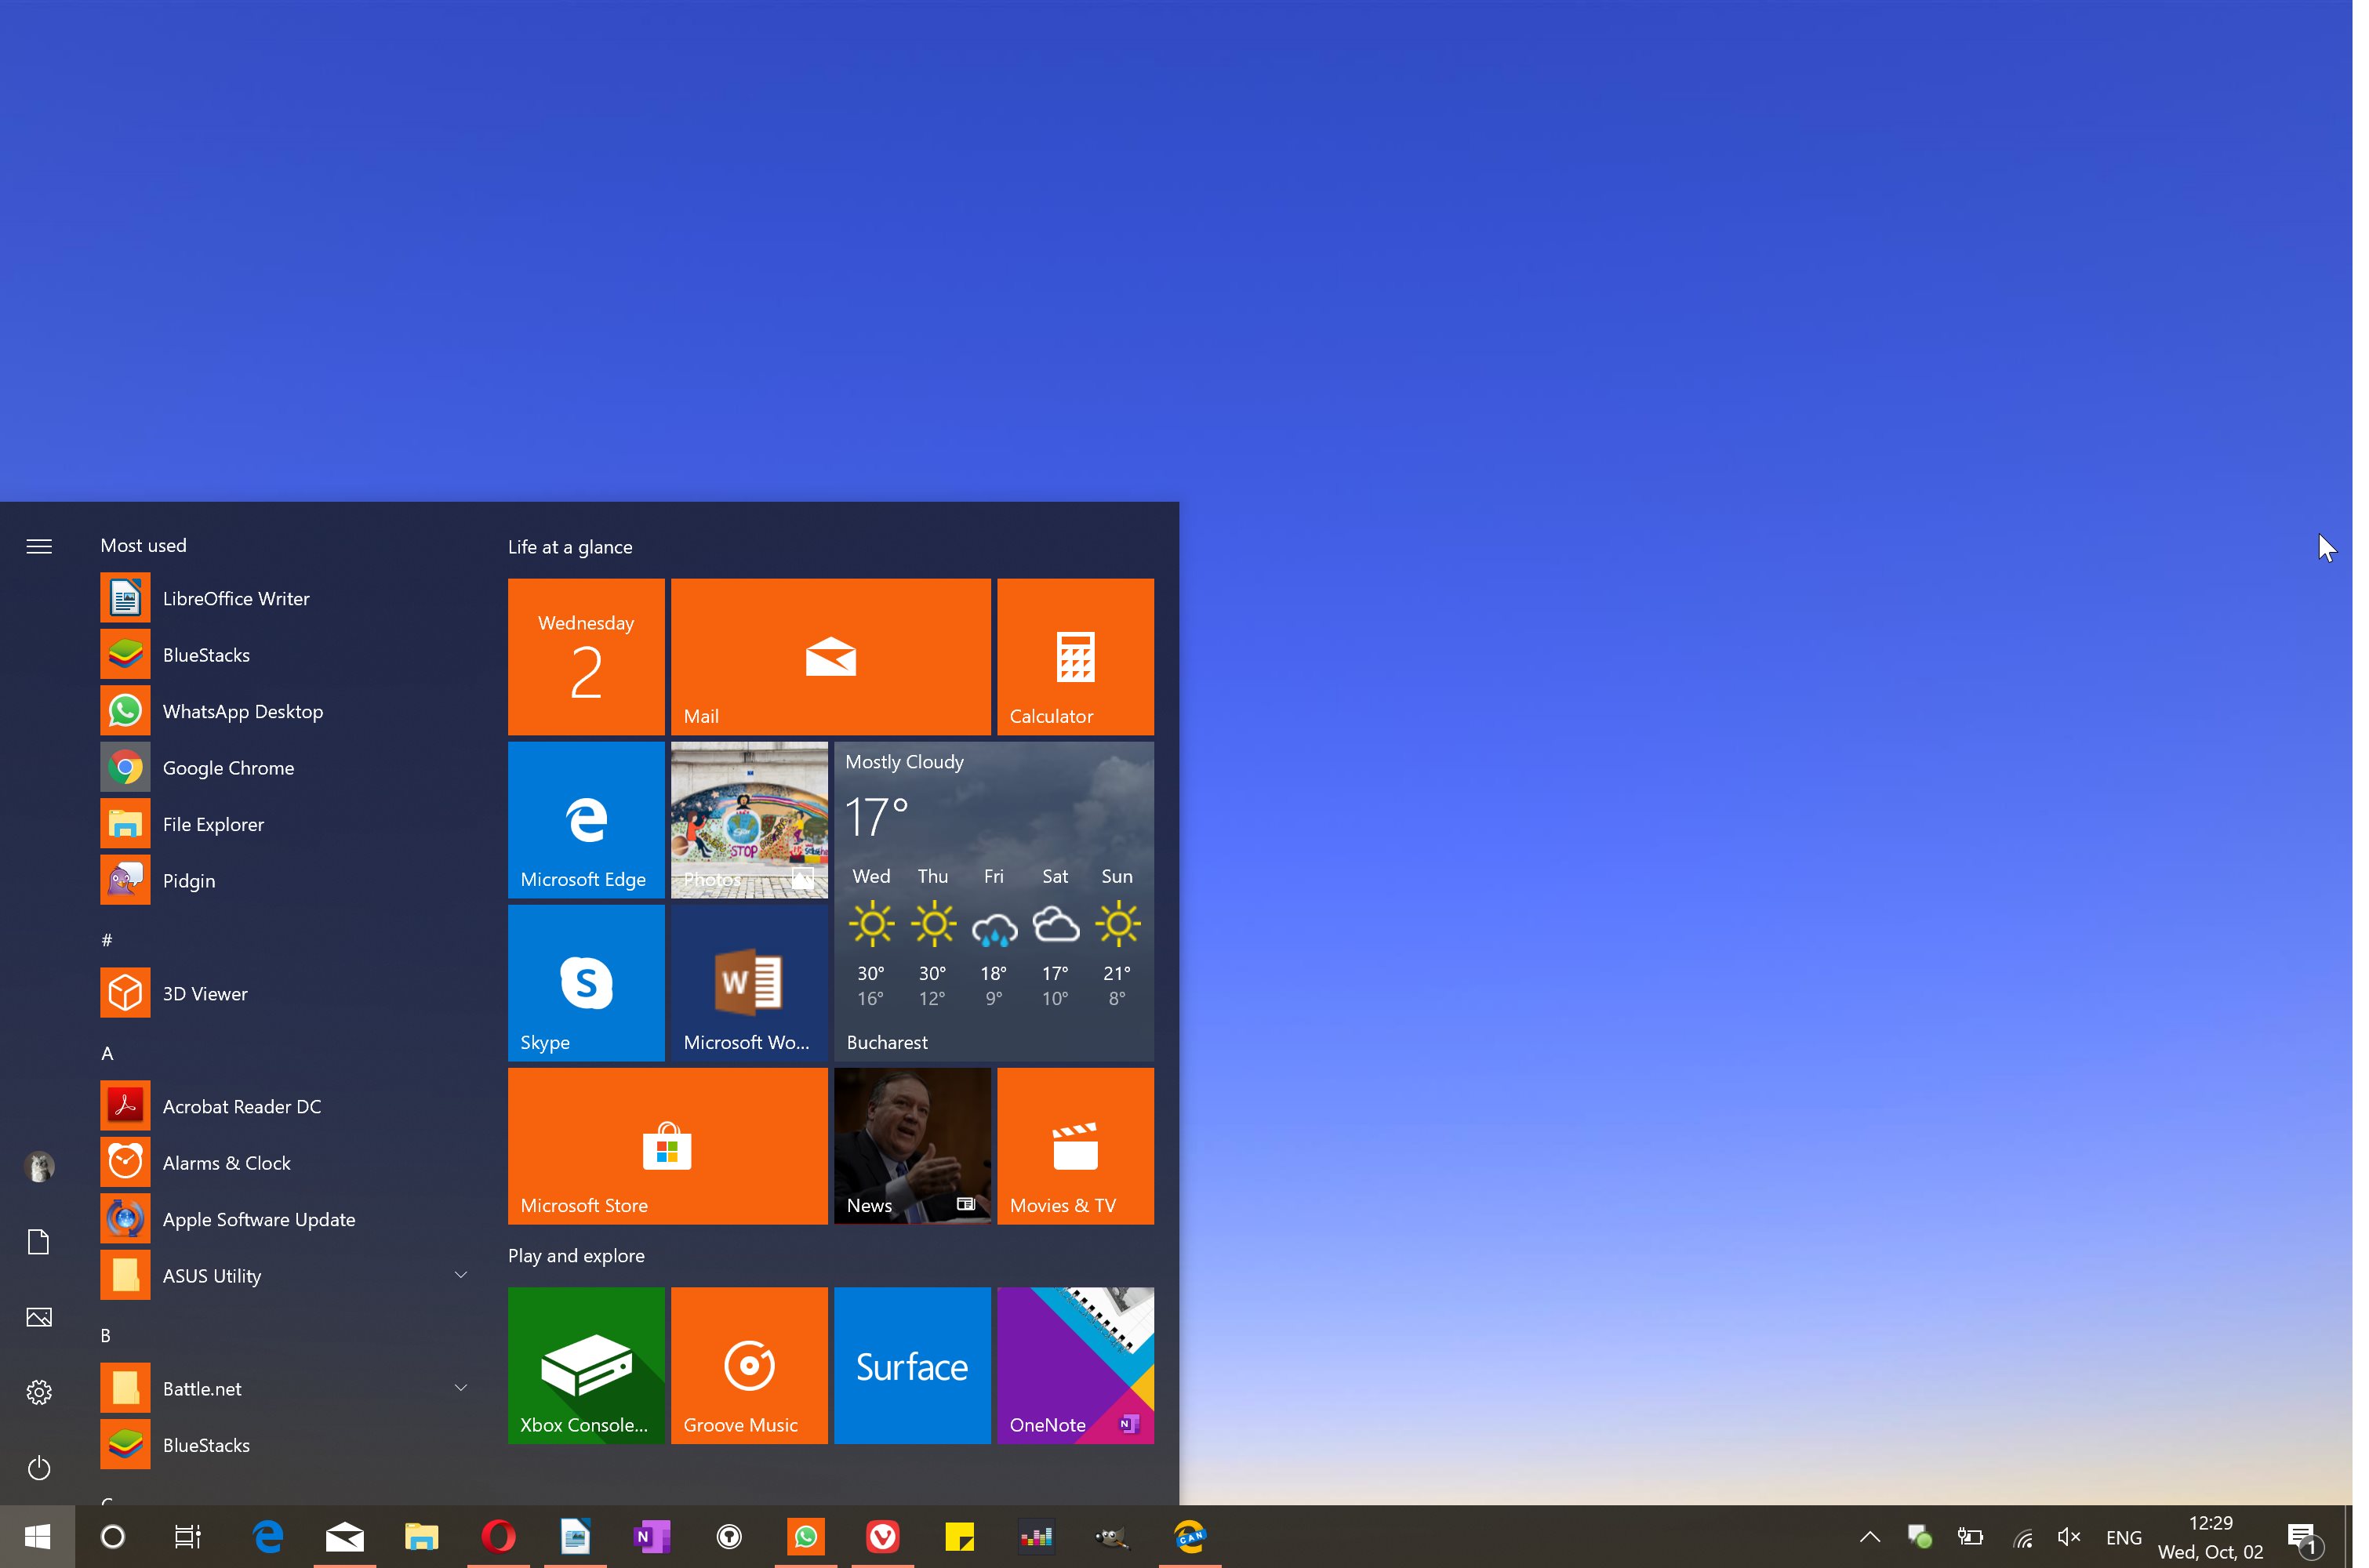 Windows 10x Home Screen